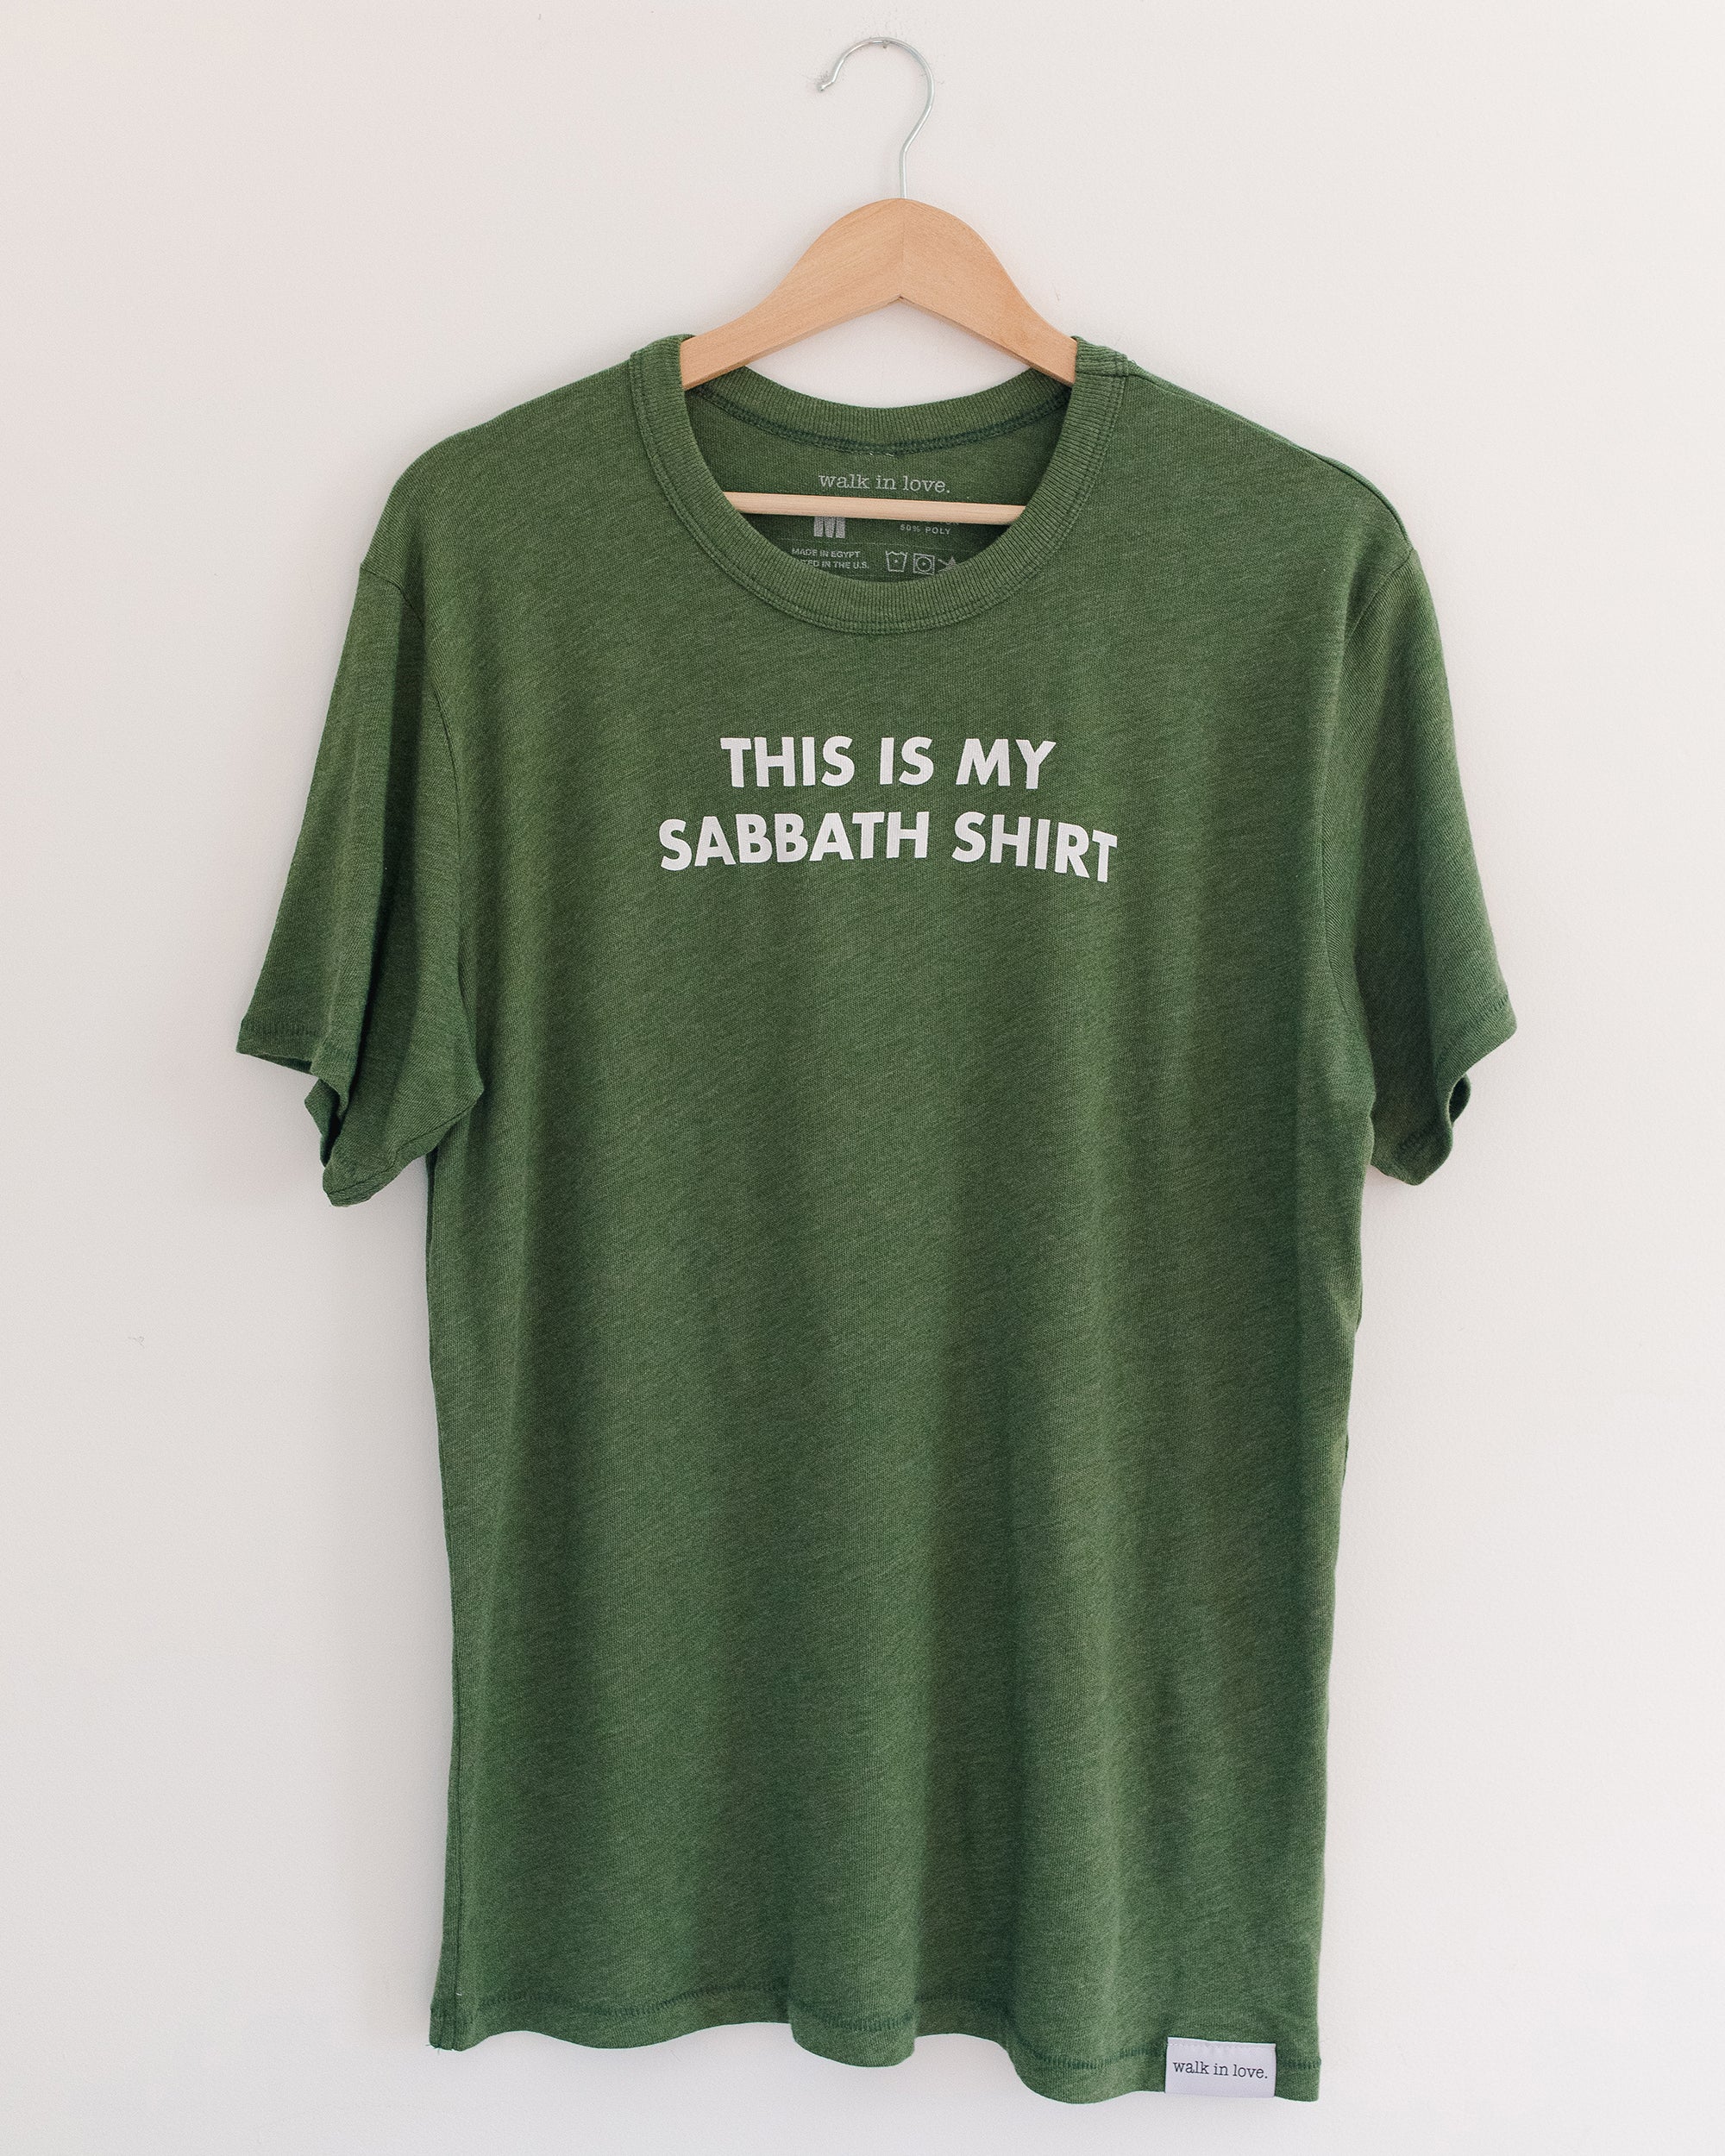 This Is My Sabbath Shirt Vintage Pine Keeper Tee